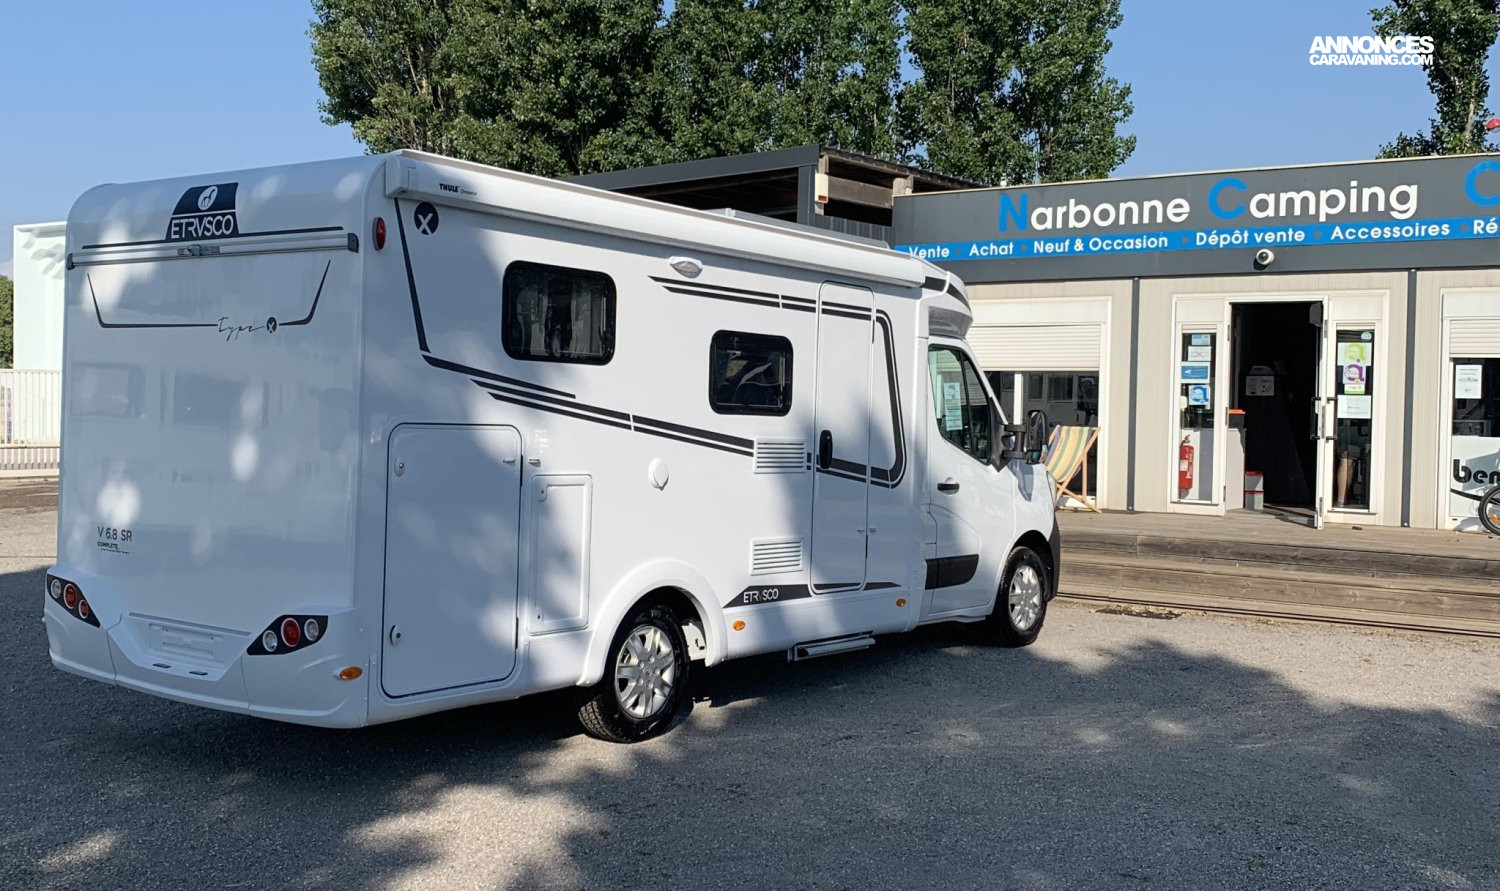 Camping-car Etrusco V6.8 SR / 2 000€ D'ACCESSOIRES OFFERTS